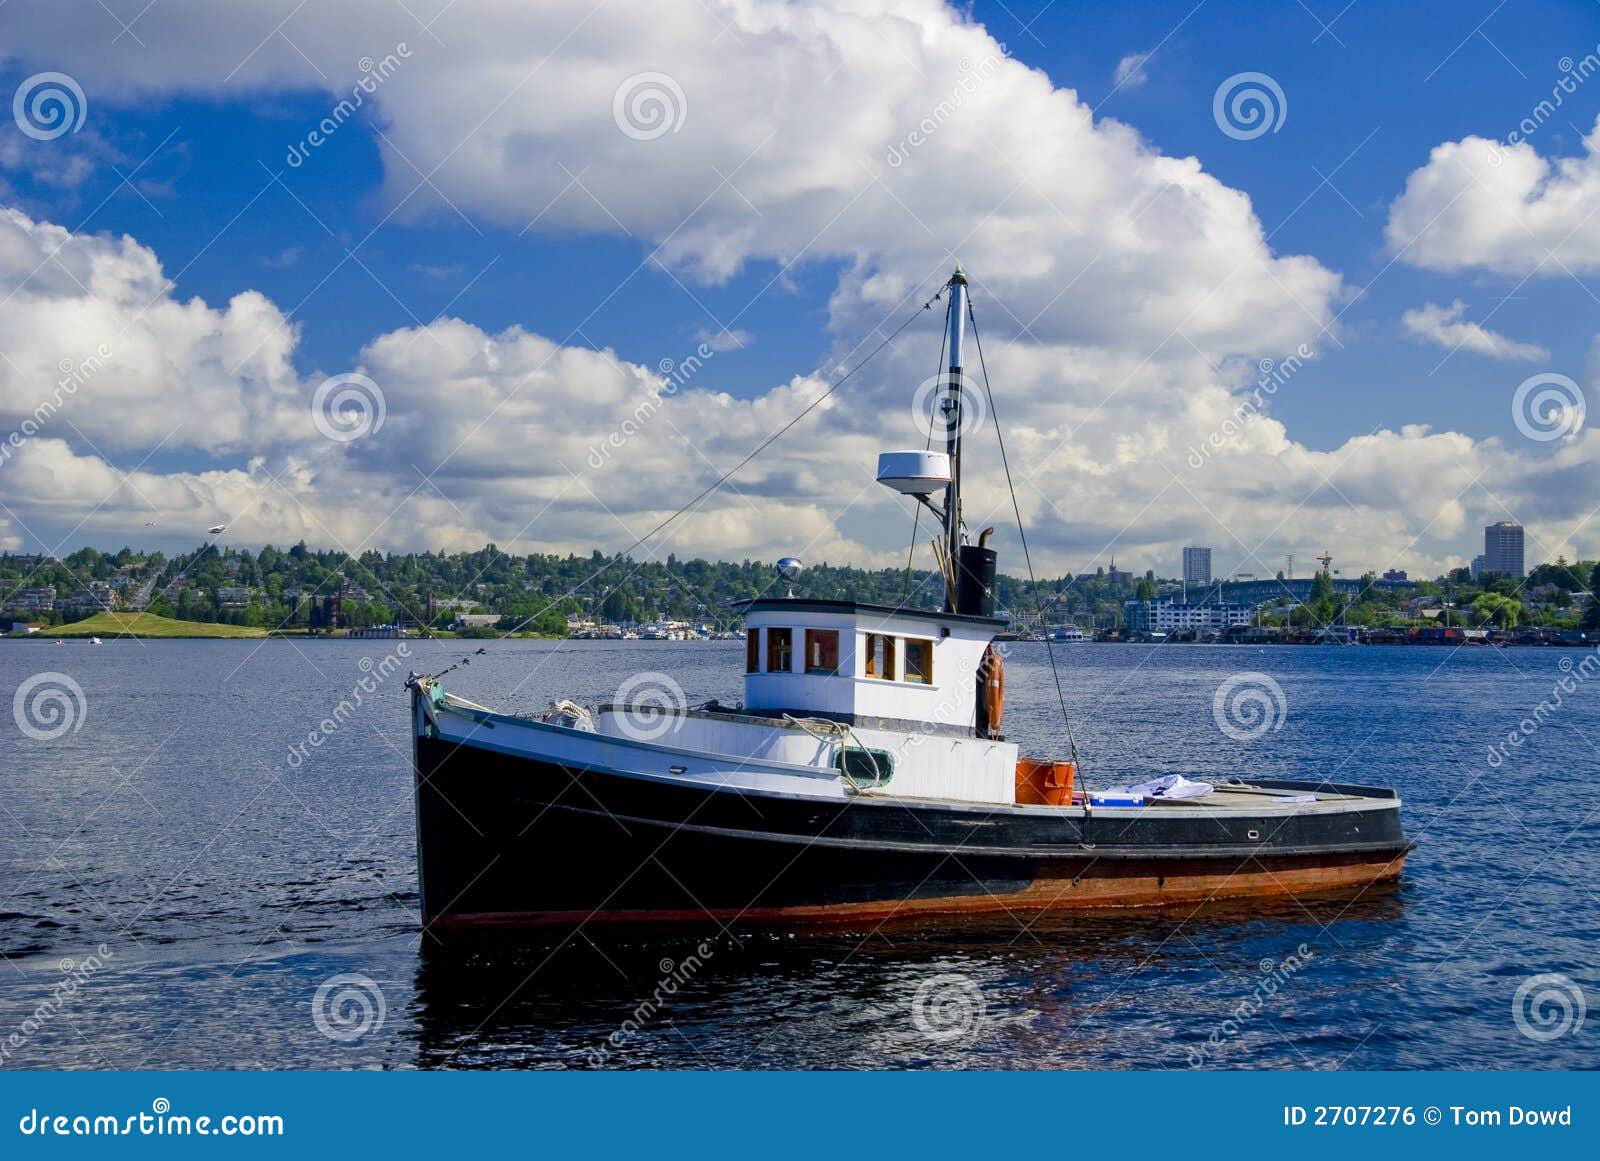 Small Wood Fishing Boat Royalty Free Stock Image - Image: 2707276